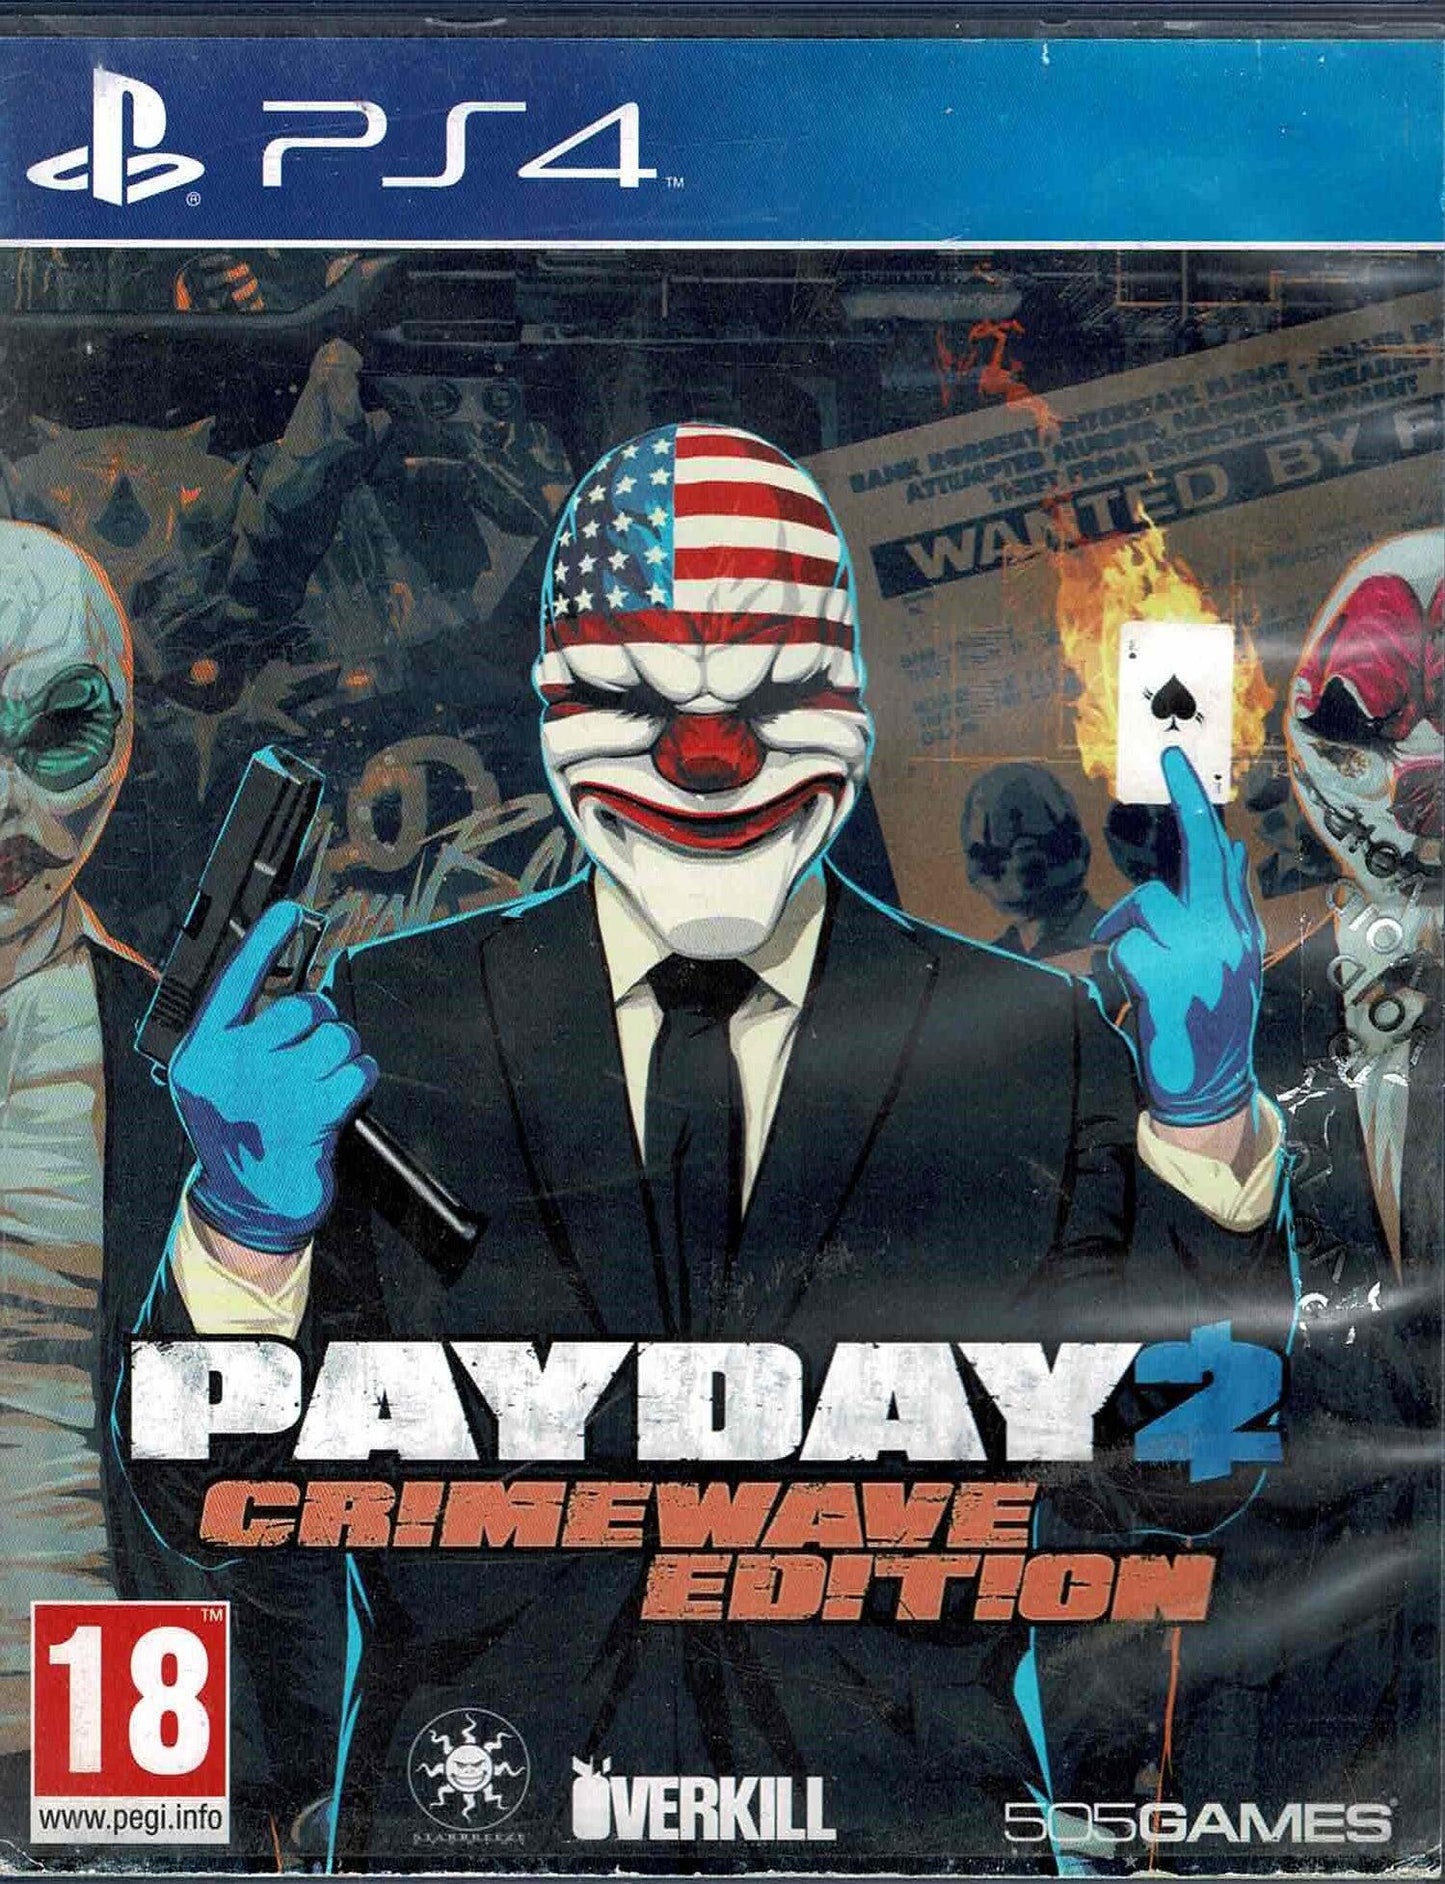 Payday 2 Crimewave Edition (kosmetiske fejl) - ZZGames.dk